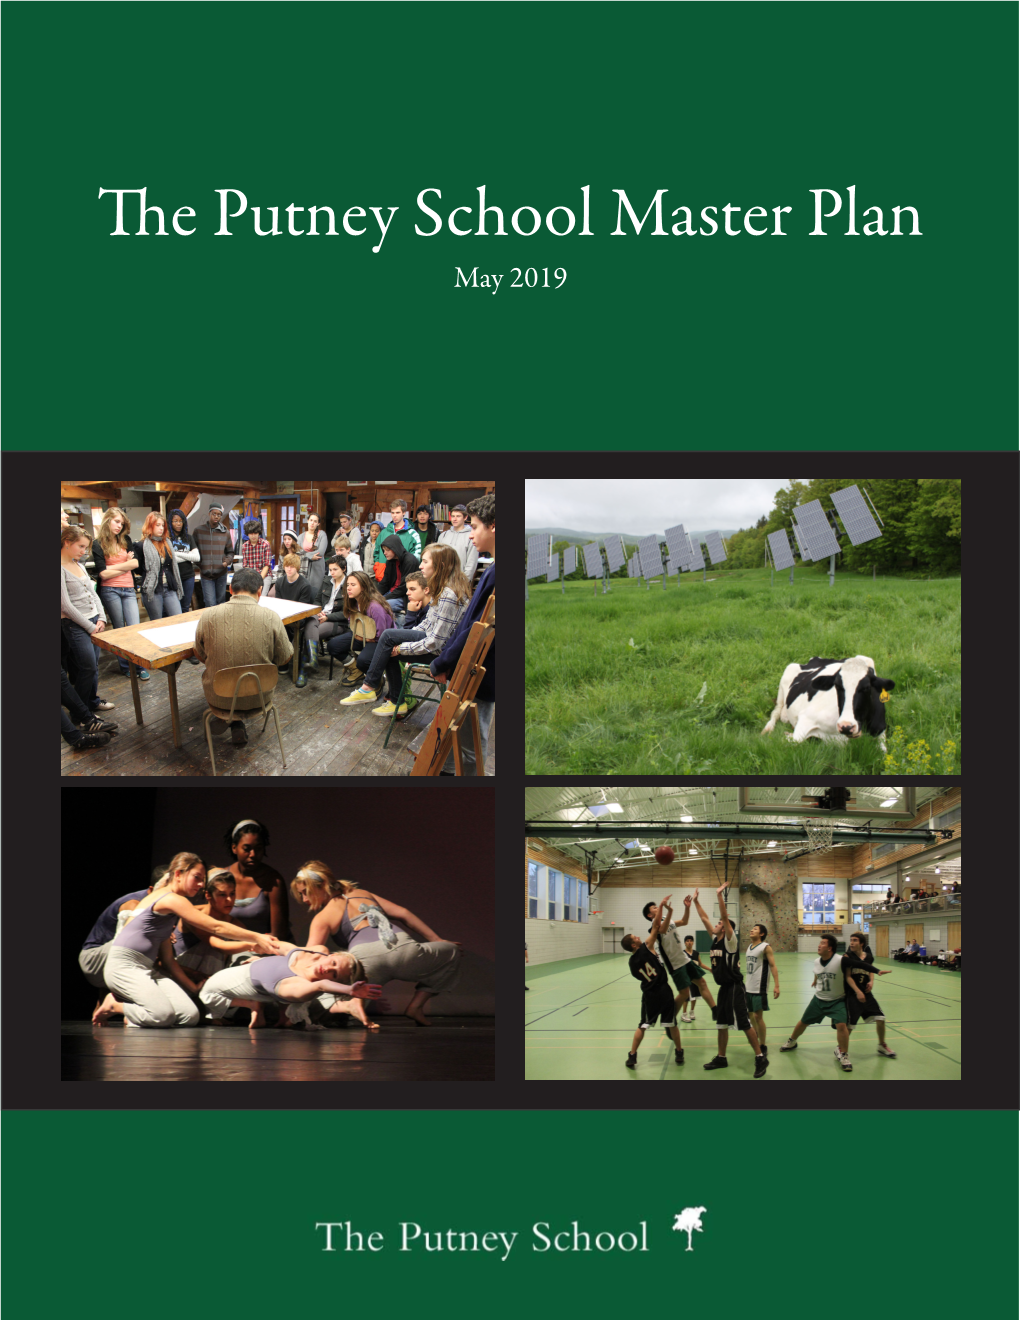 The Putney School Master Plan May 2019